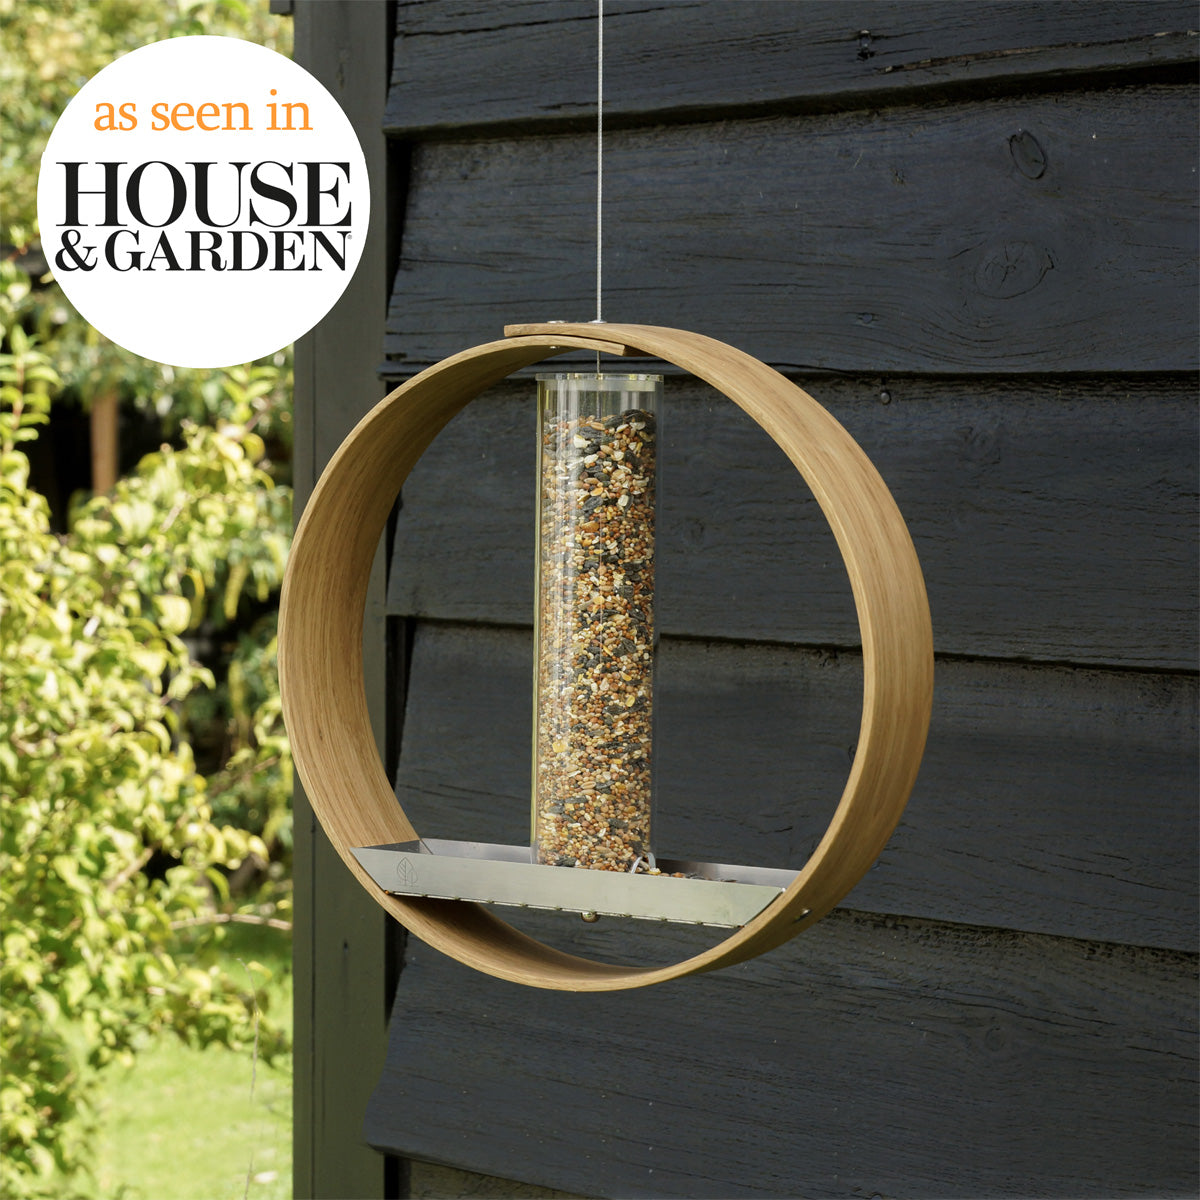 Personalised hanging bird feeder.